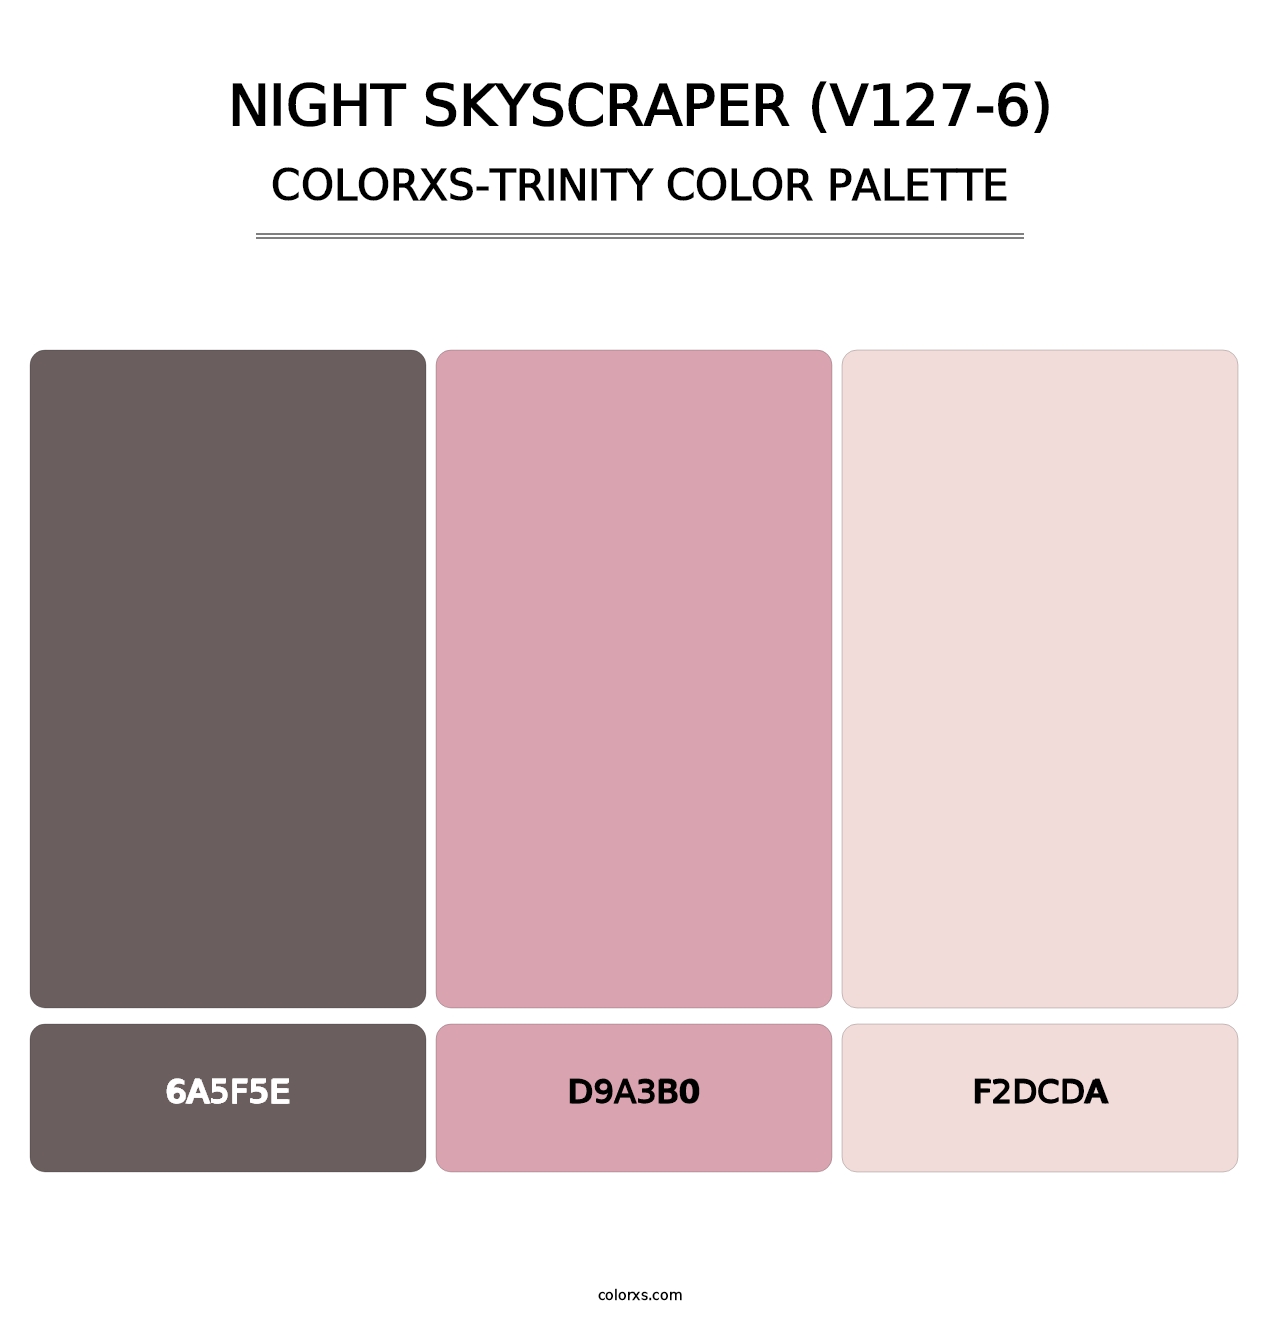 Night Skyscraper (V127-6) - Colorxs Trinity Palette